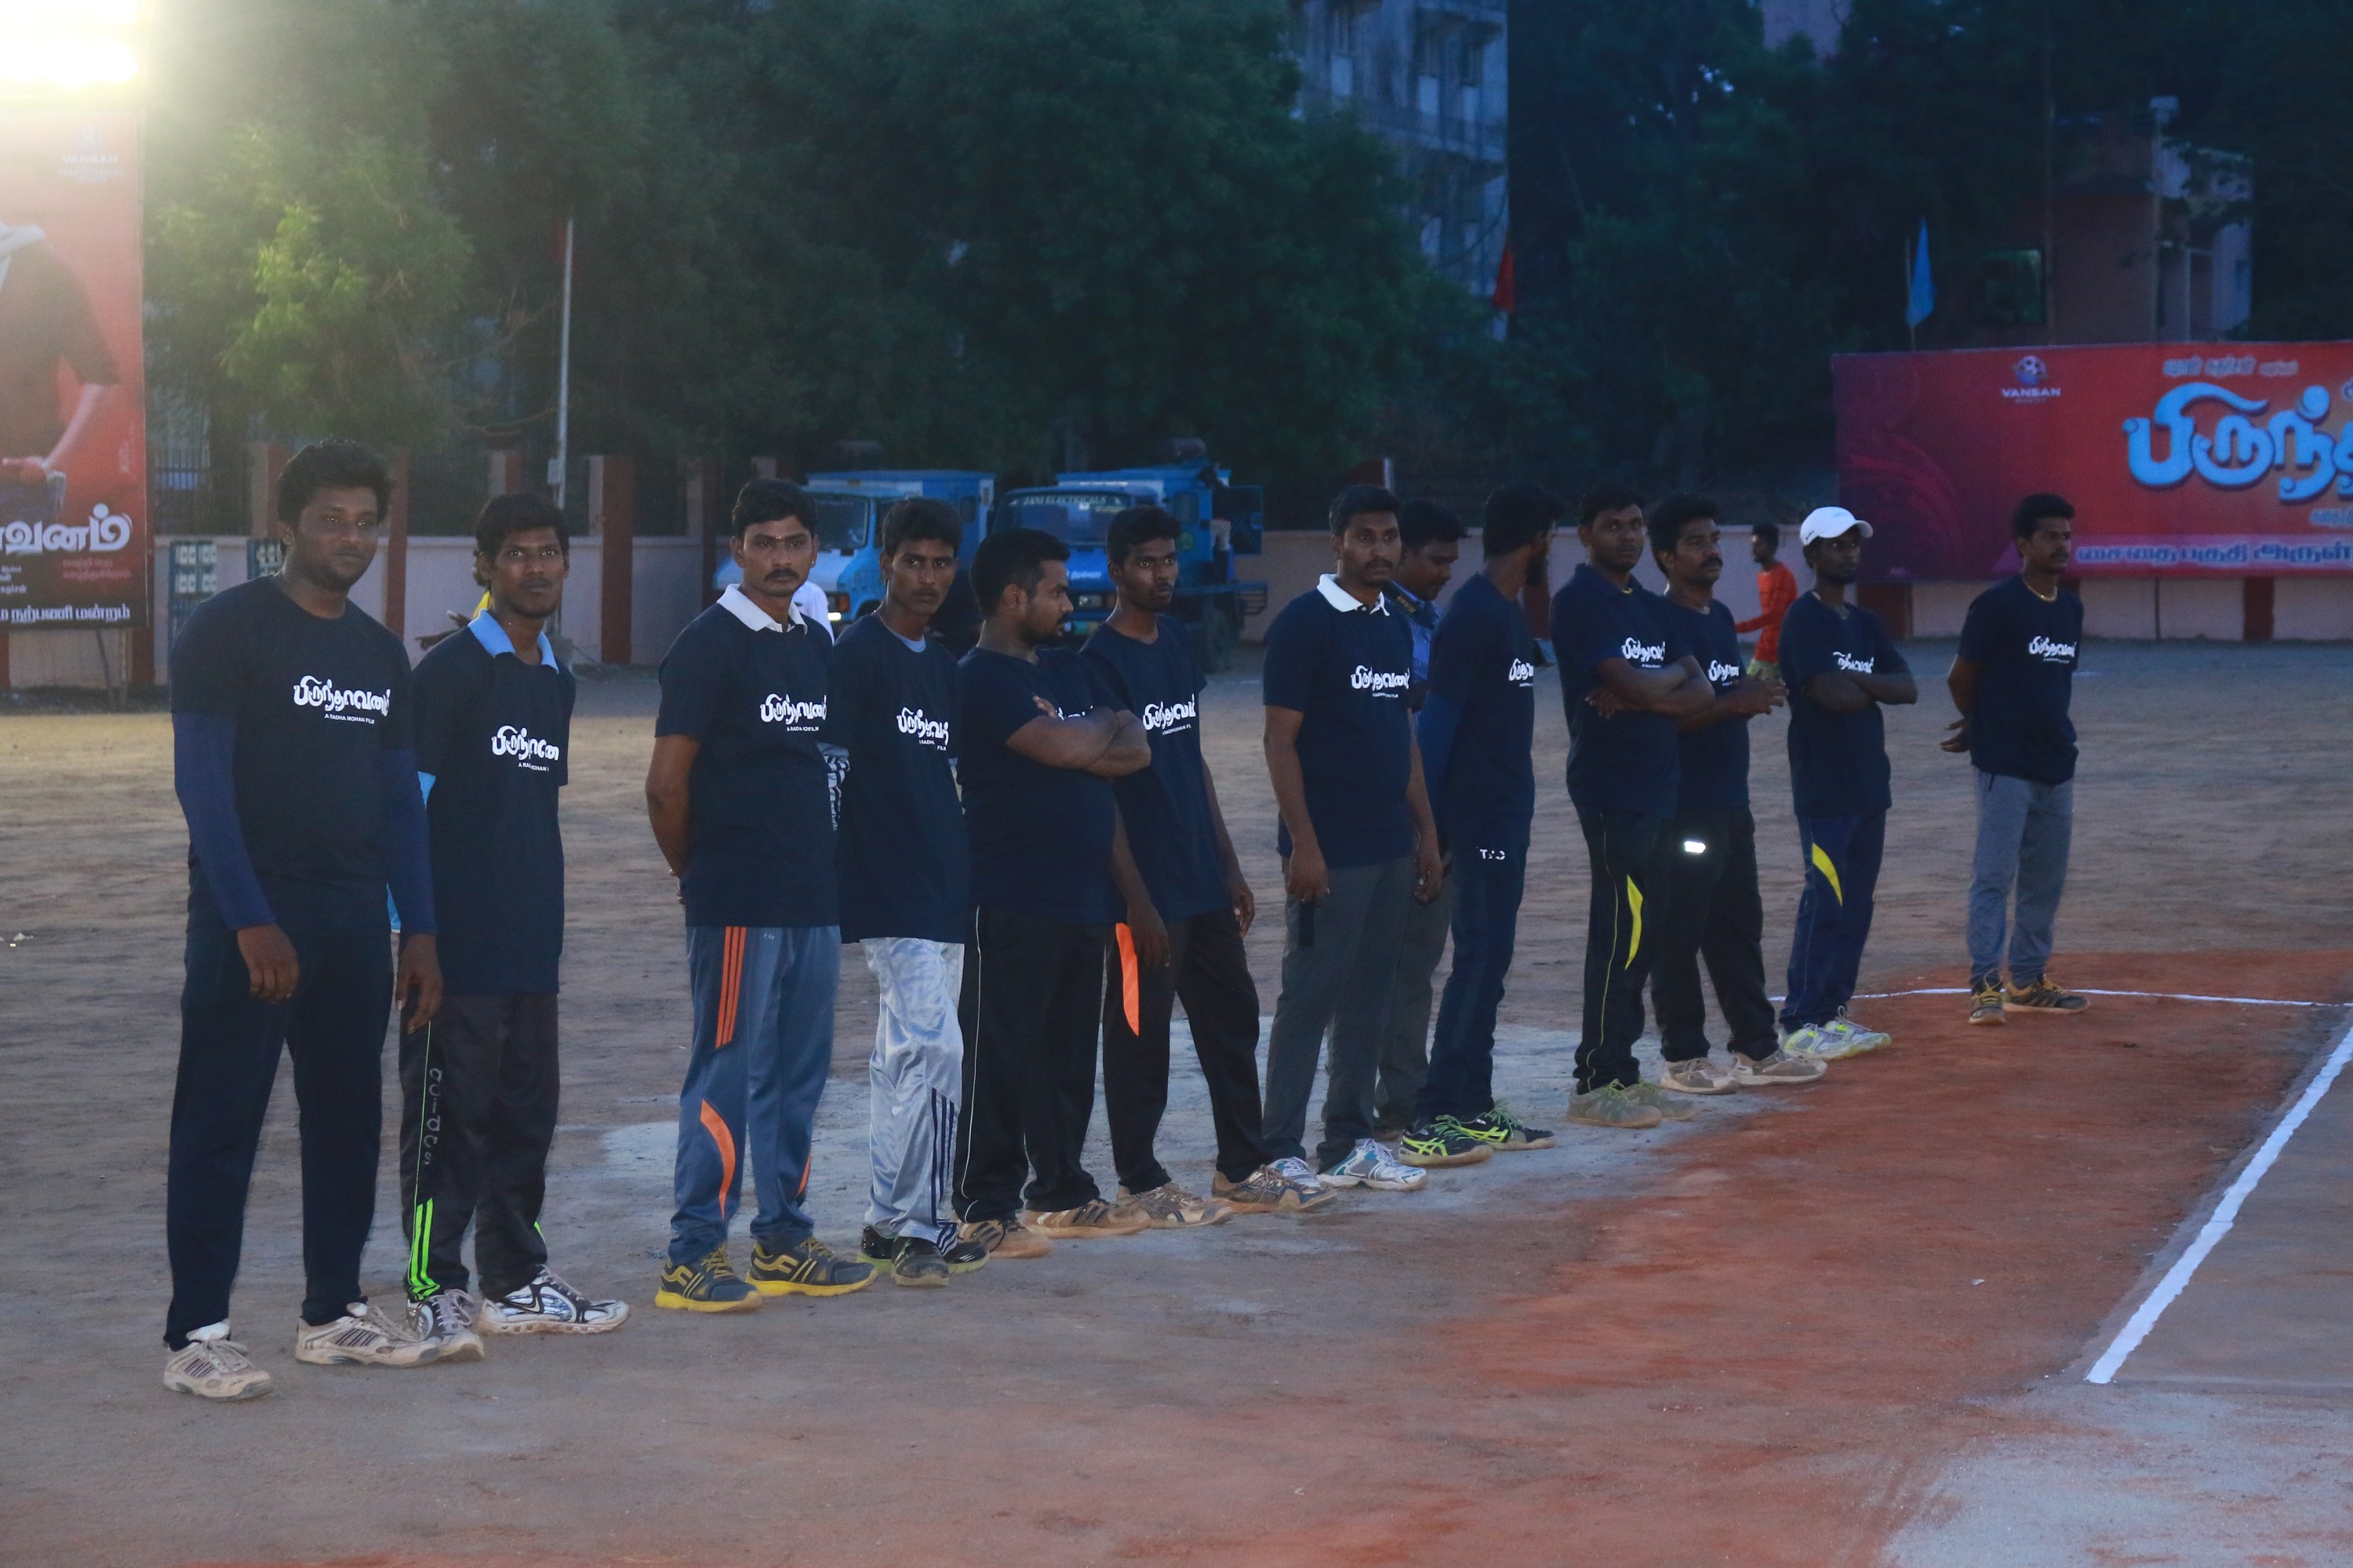 Inauguration of Brindavanam Koppai Cricket Tournament Event Pics (6)